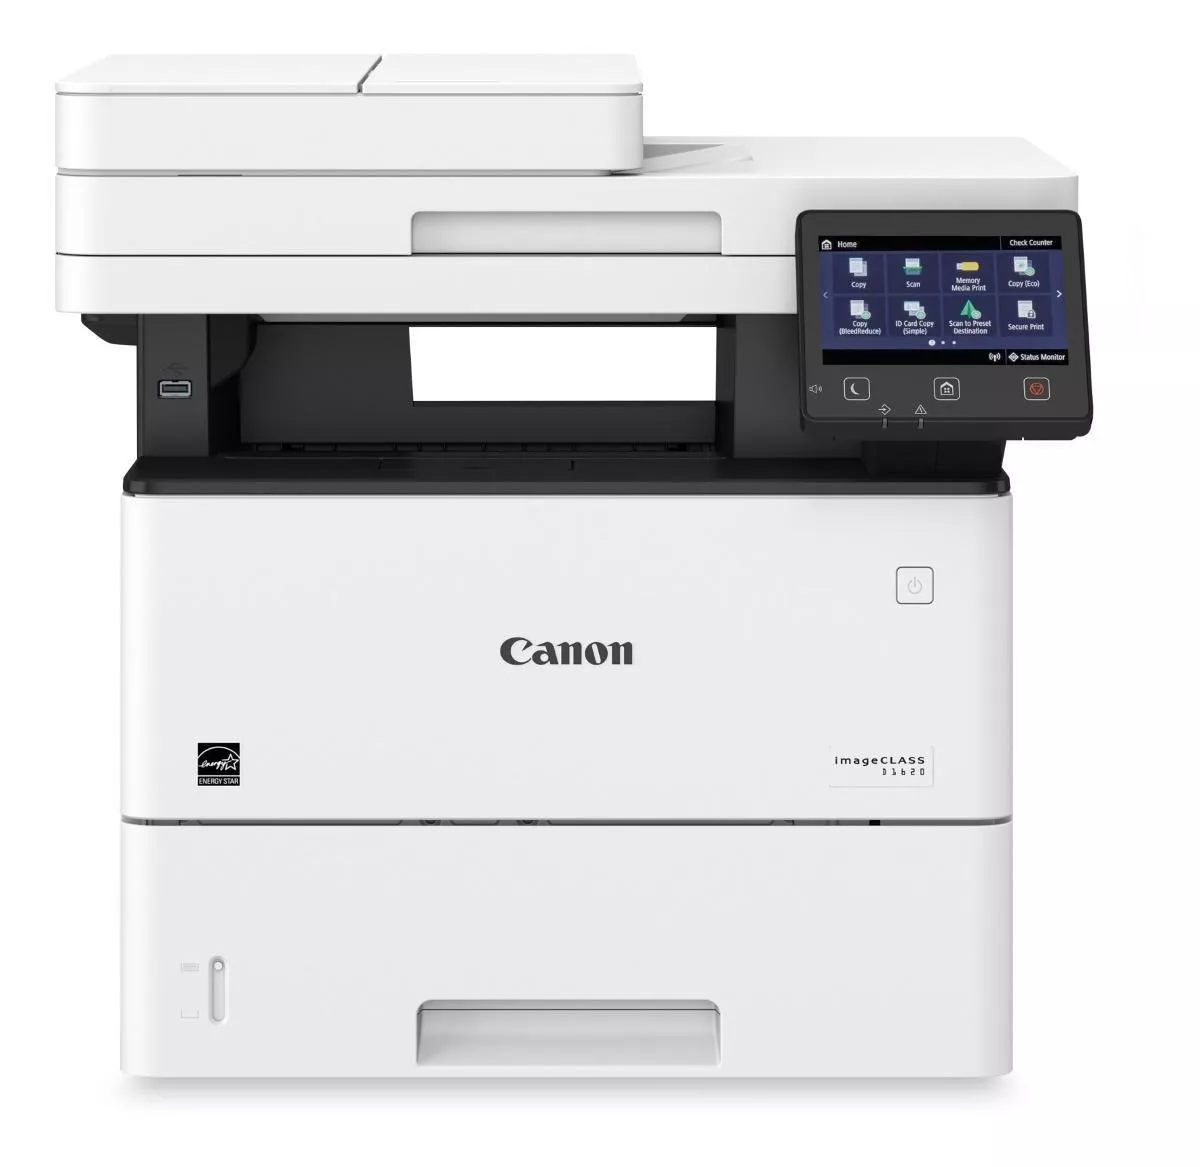 Impresora Multifunción Canon Imageclass D1620 Con Wifi Blanca Y Negra 120v - 127v